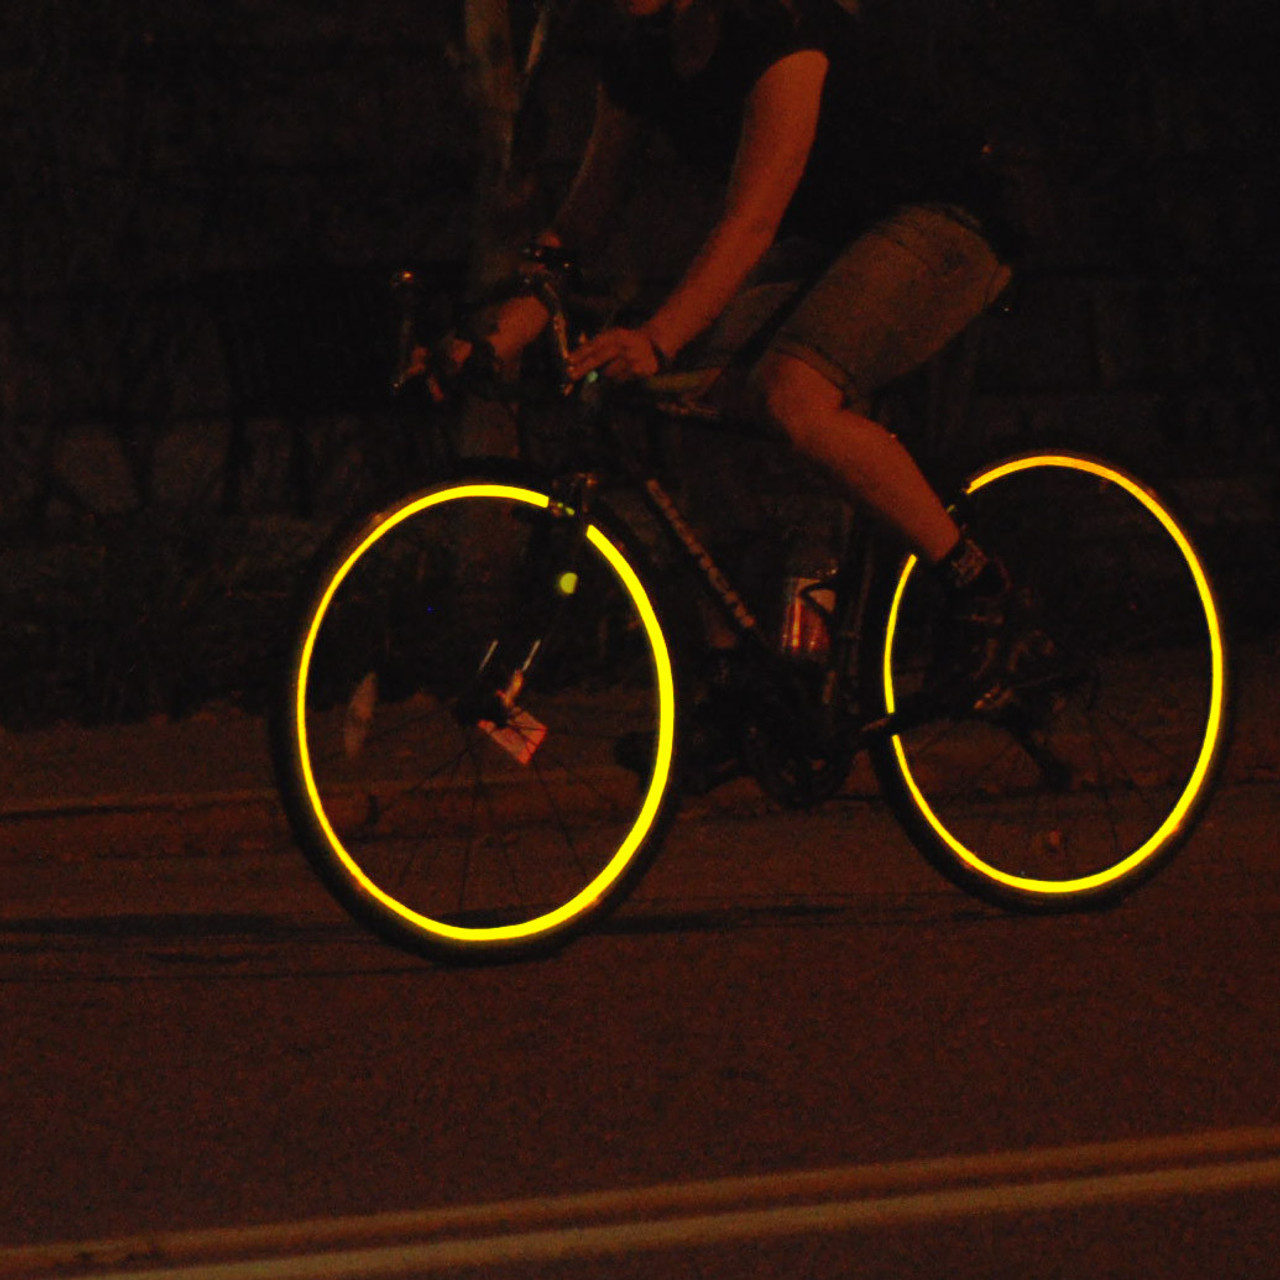 bicycle wheel reflective tape